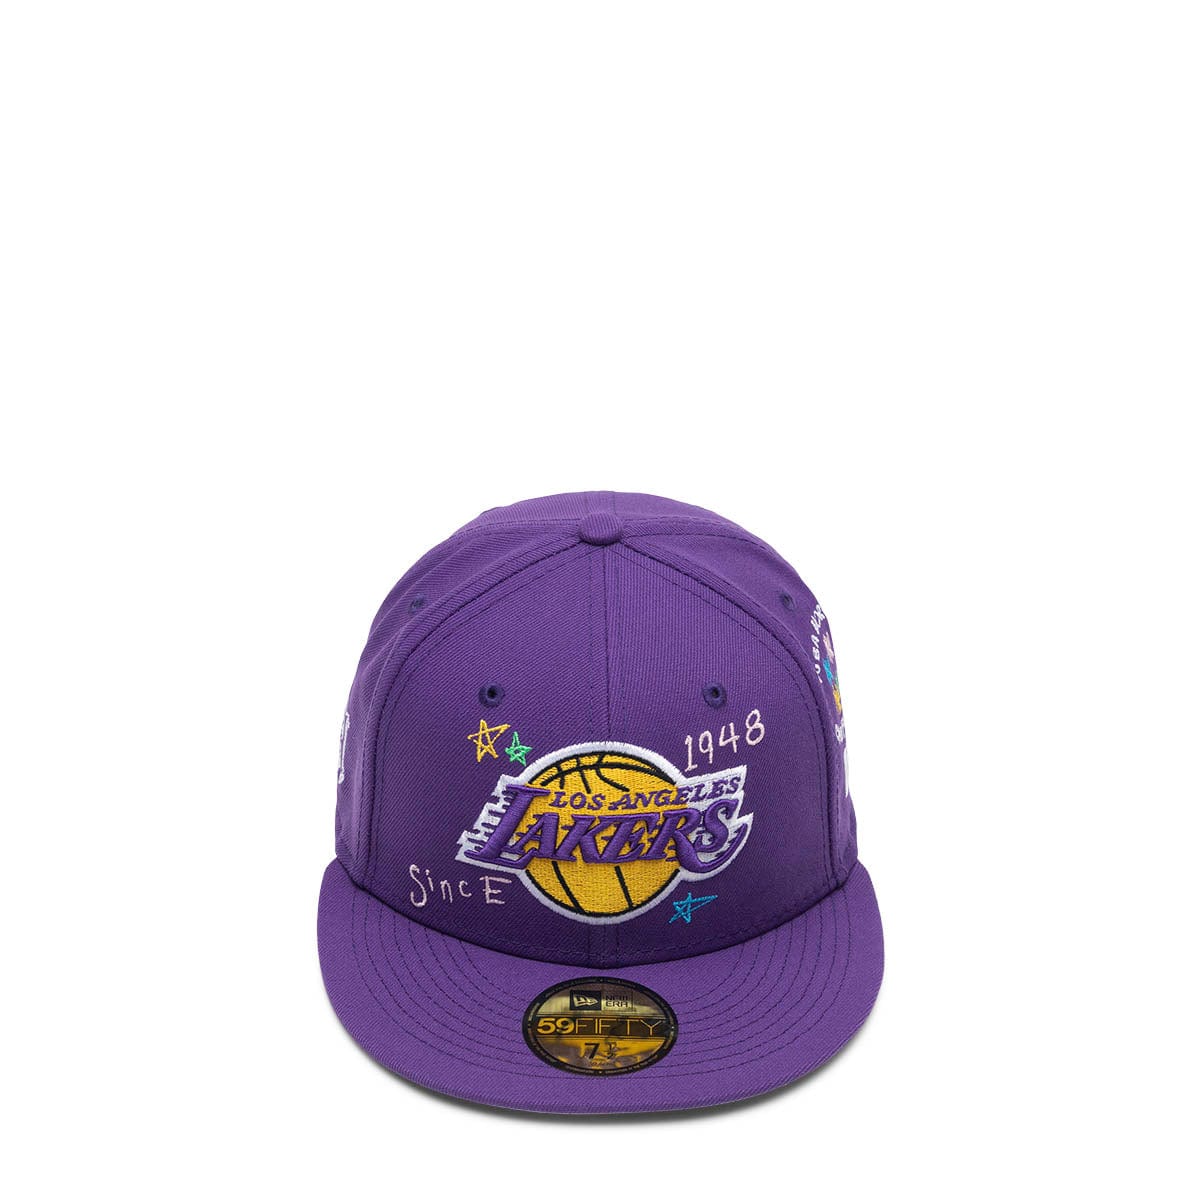 New Era x Felt 5950 Fitted Los Angeles Lakers 7 1/8 / Purple